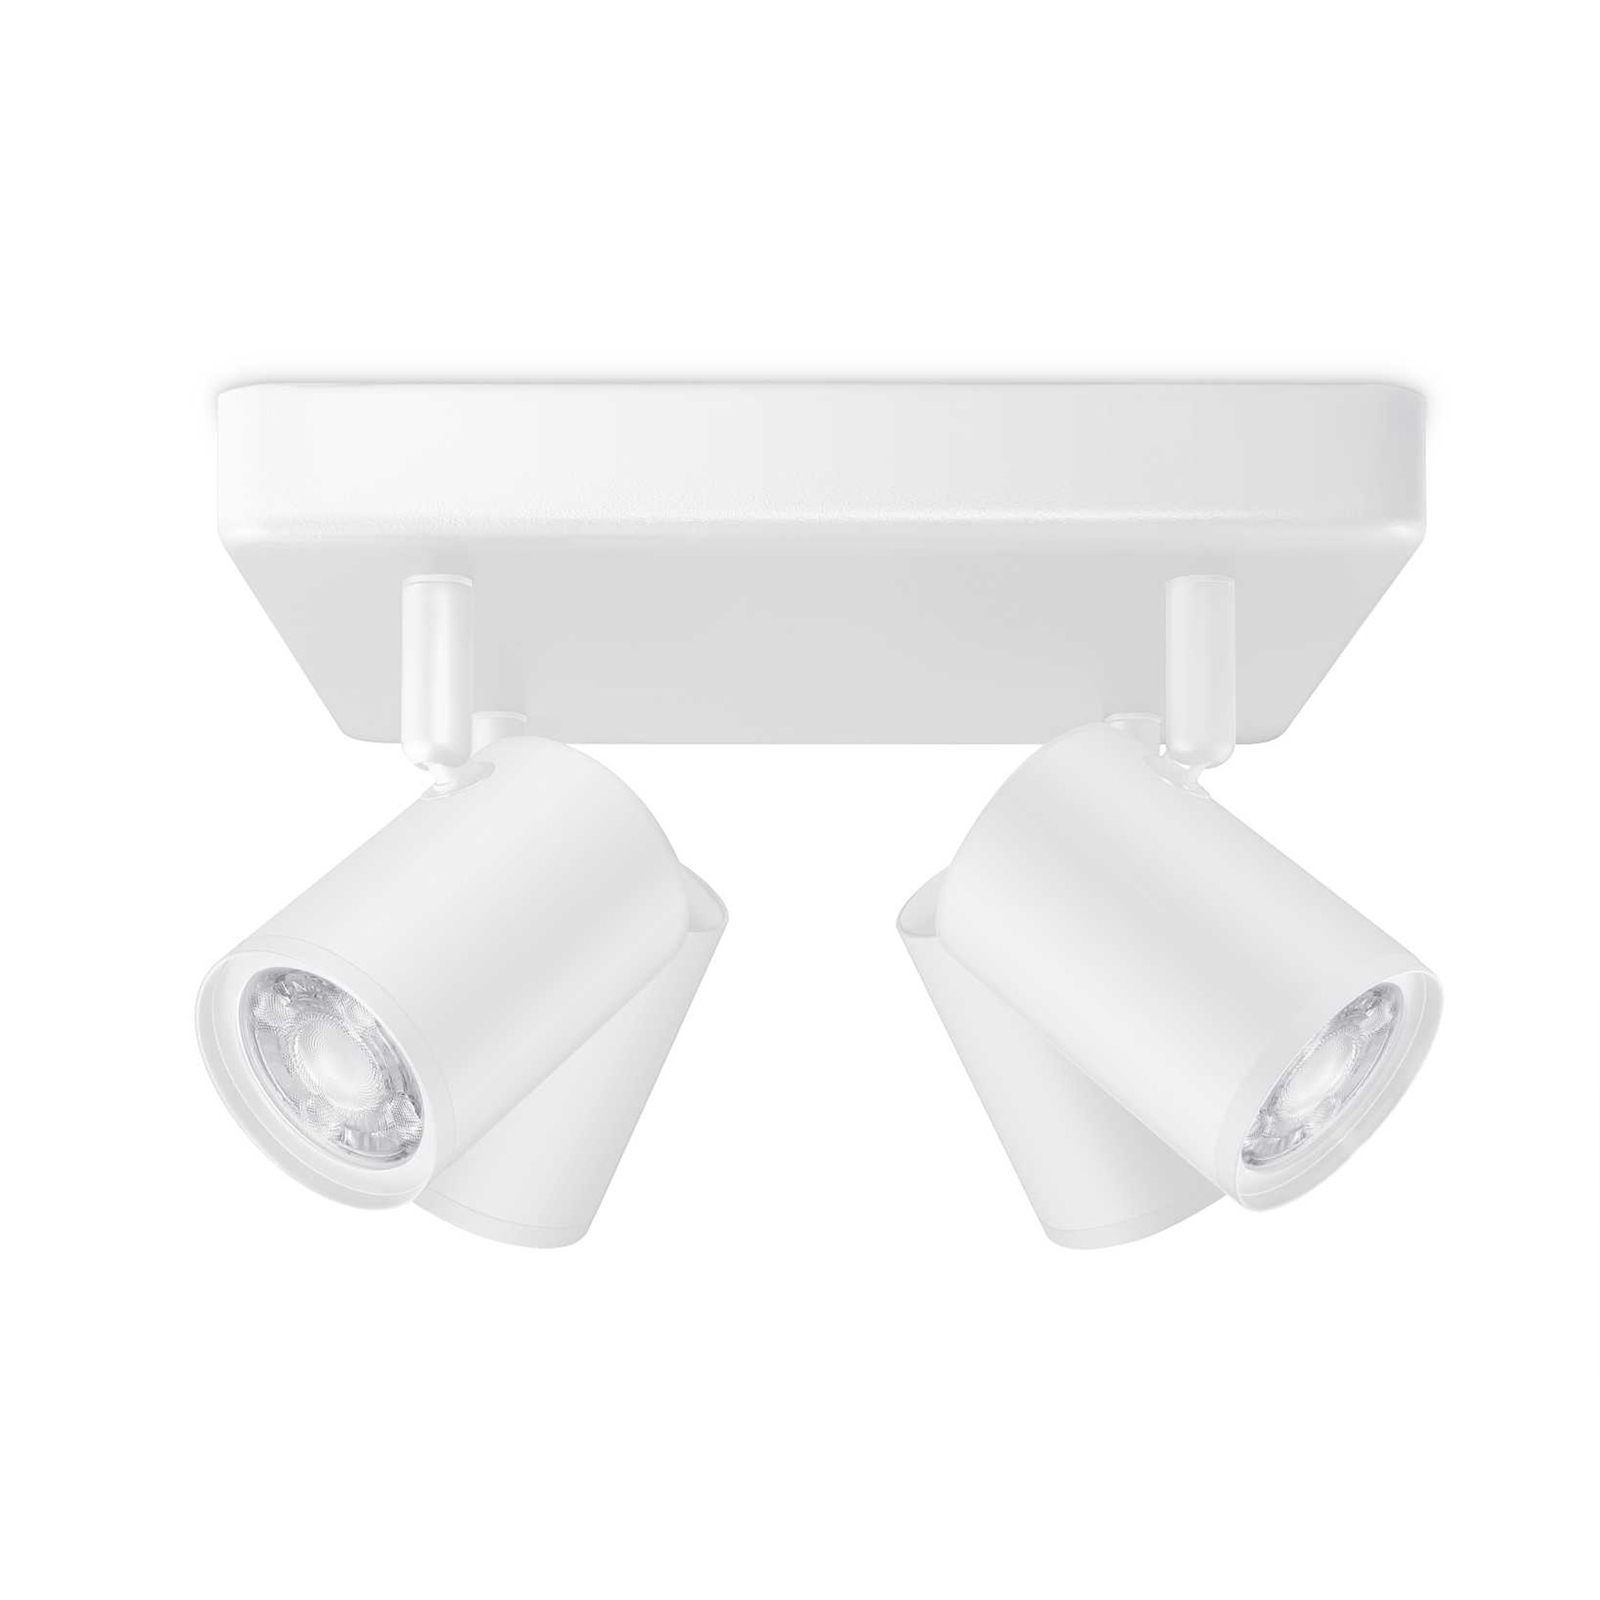 WiZ LED downlight Imageo, 4-bulb square white